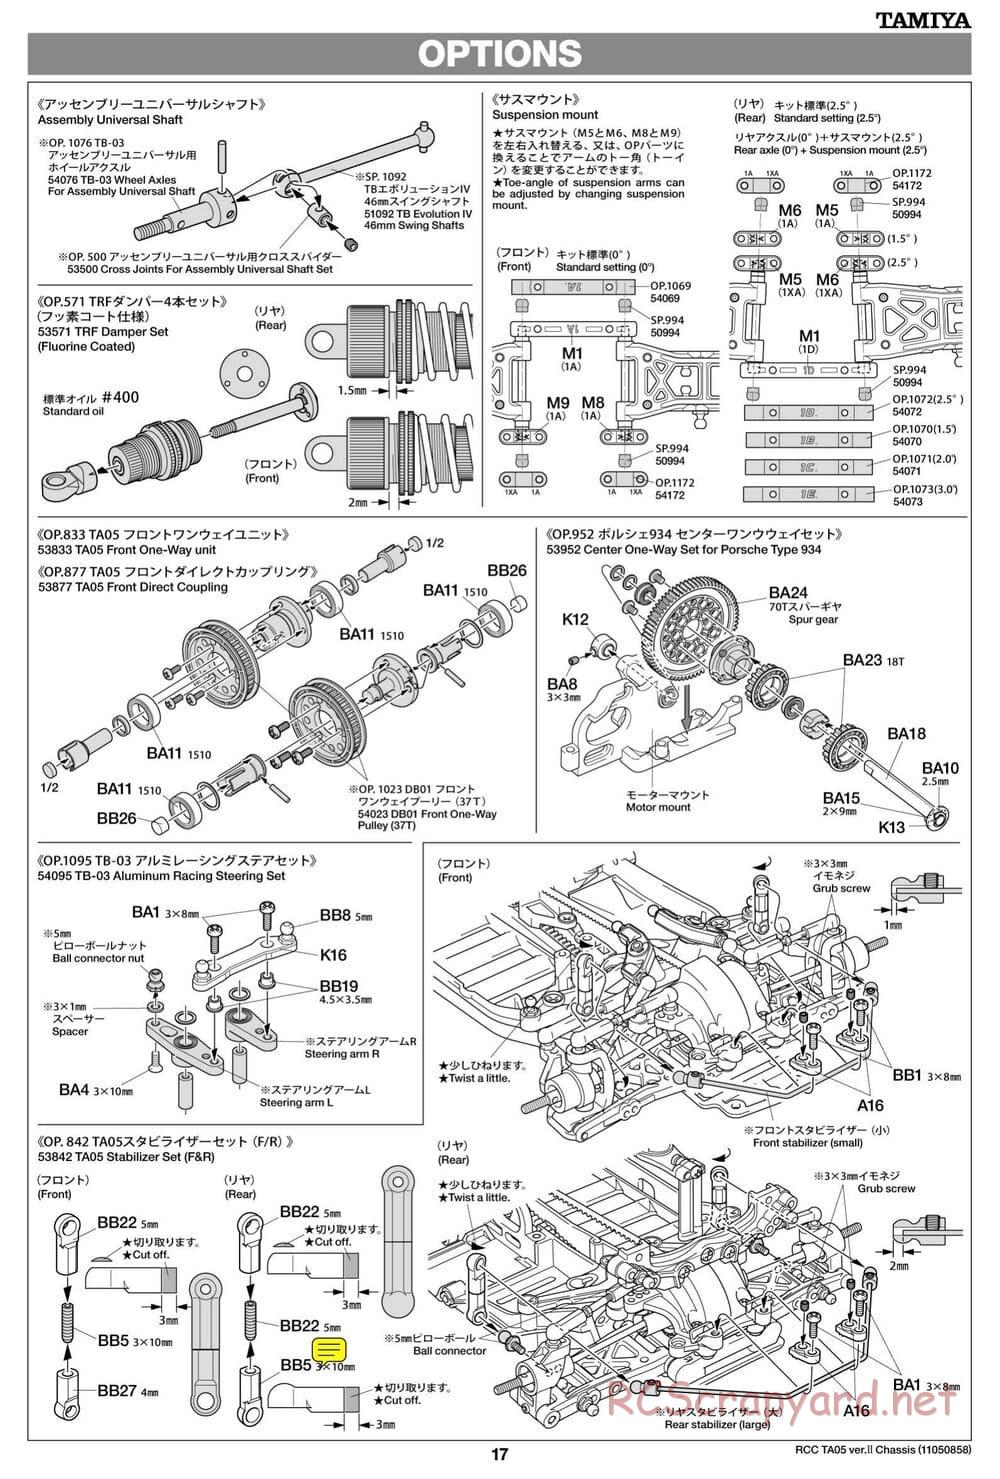 Tamiya - TA05 Ver.II Chassis - Manual - Page 17